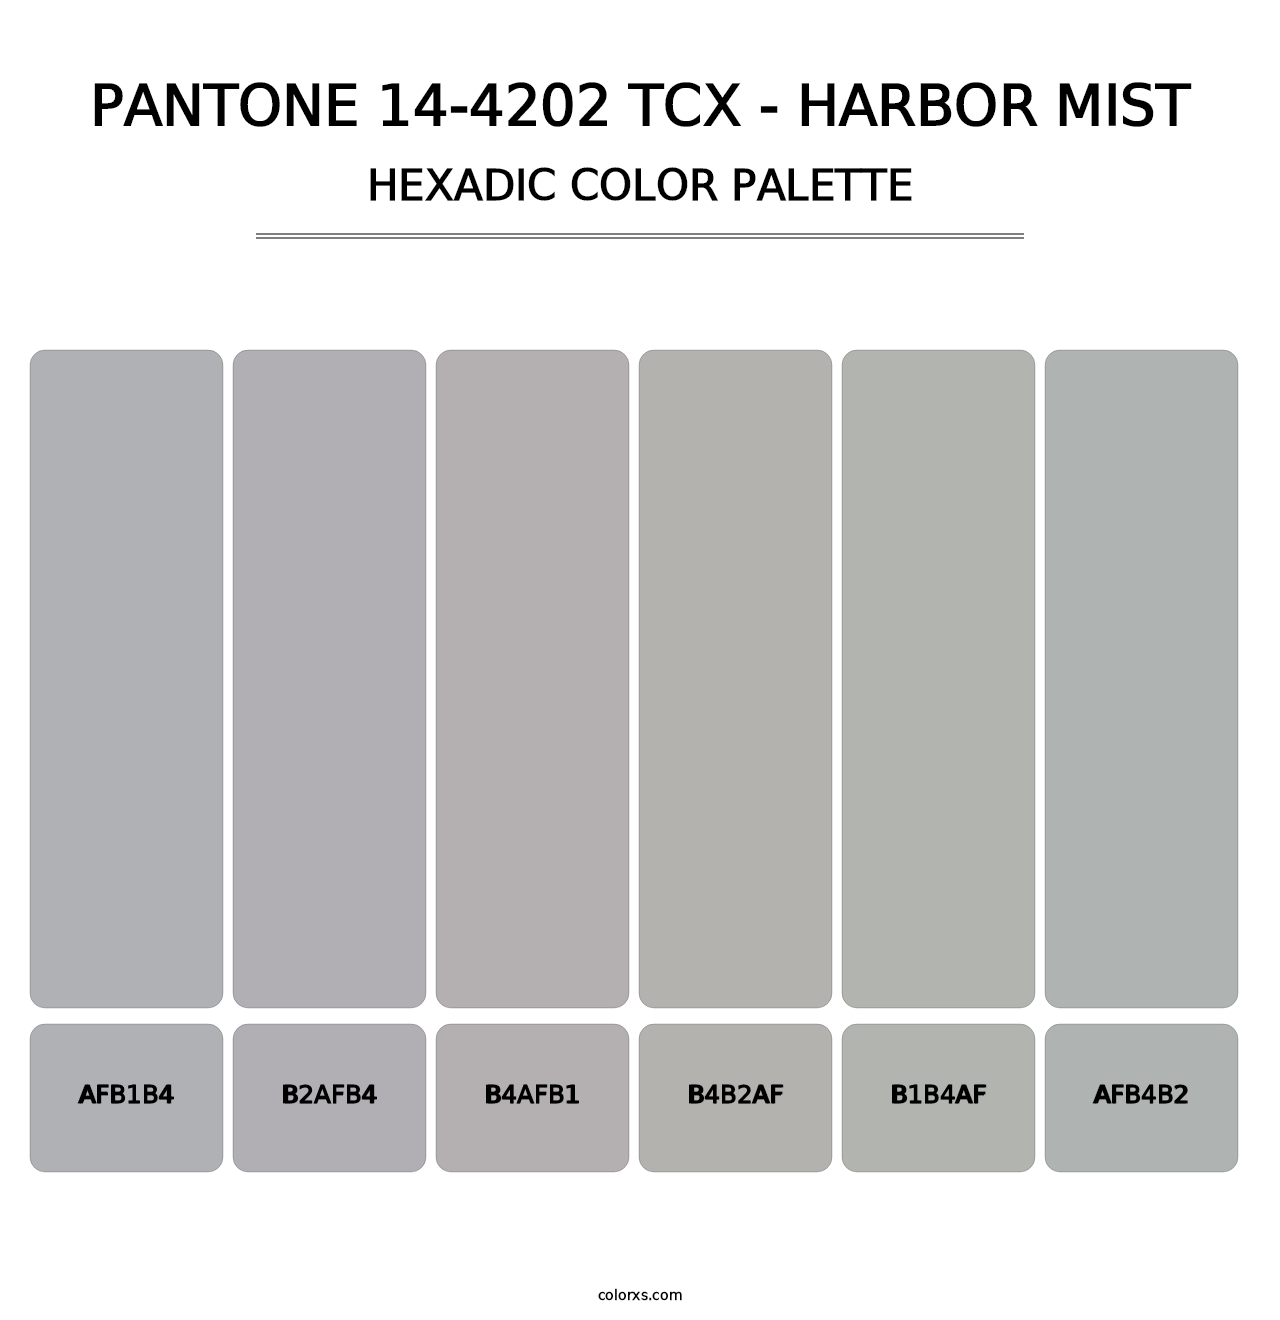 PANTONE 14-4202 TCX - Harbor Mist - Hexadic Color Palette